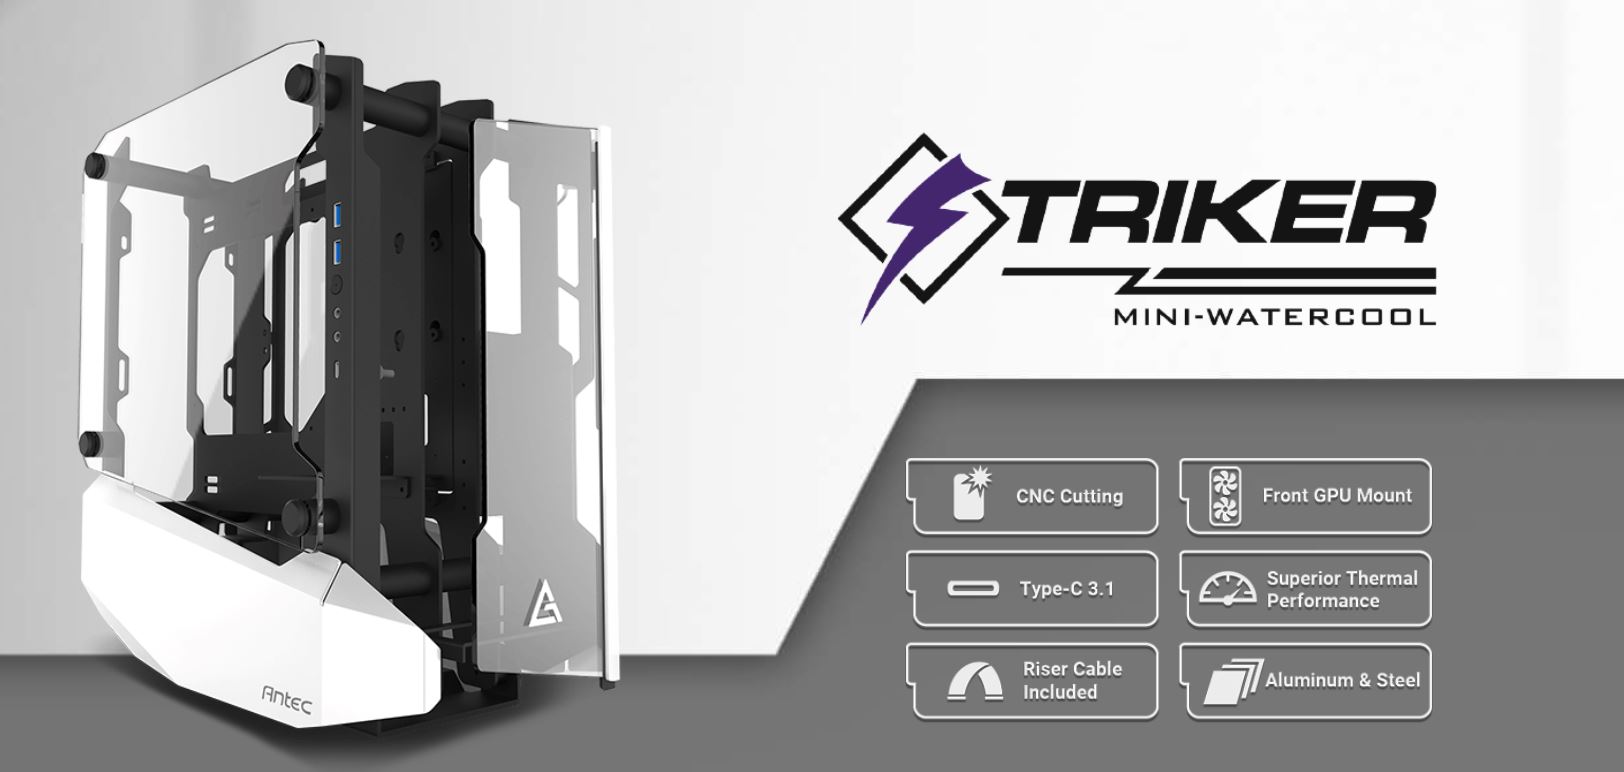 Antec STRIKER Open Frame Mini-ITX Aluminium and Steel Case, PCI-E Riser Cable included. USB 3.1 Type-C, Aluminium Steel, Superior Thermal Performance